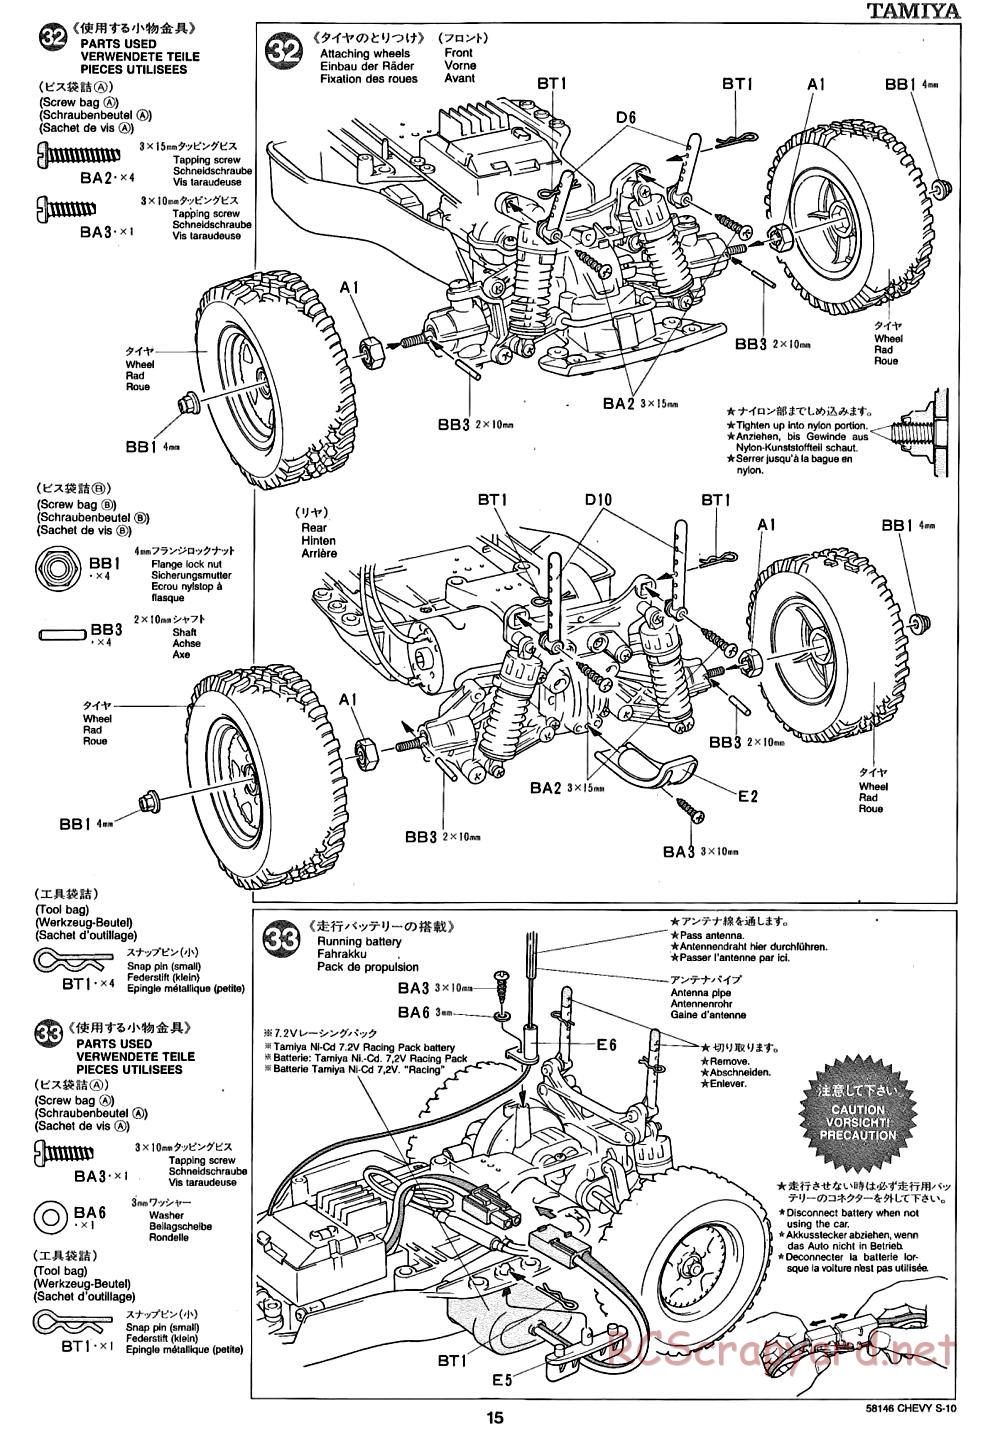 Tamiya - Chevy S-10 Chassis - Manual - Page 15